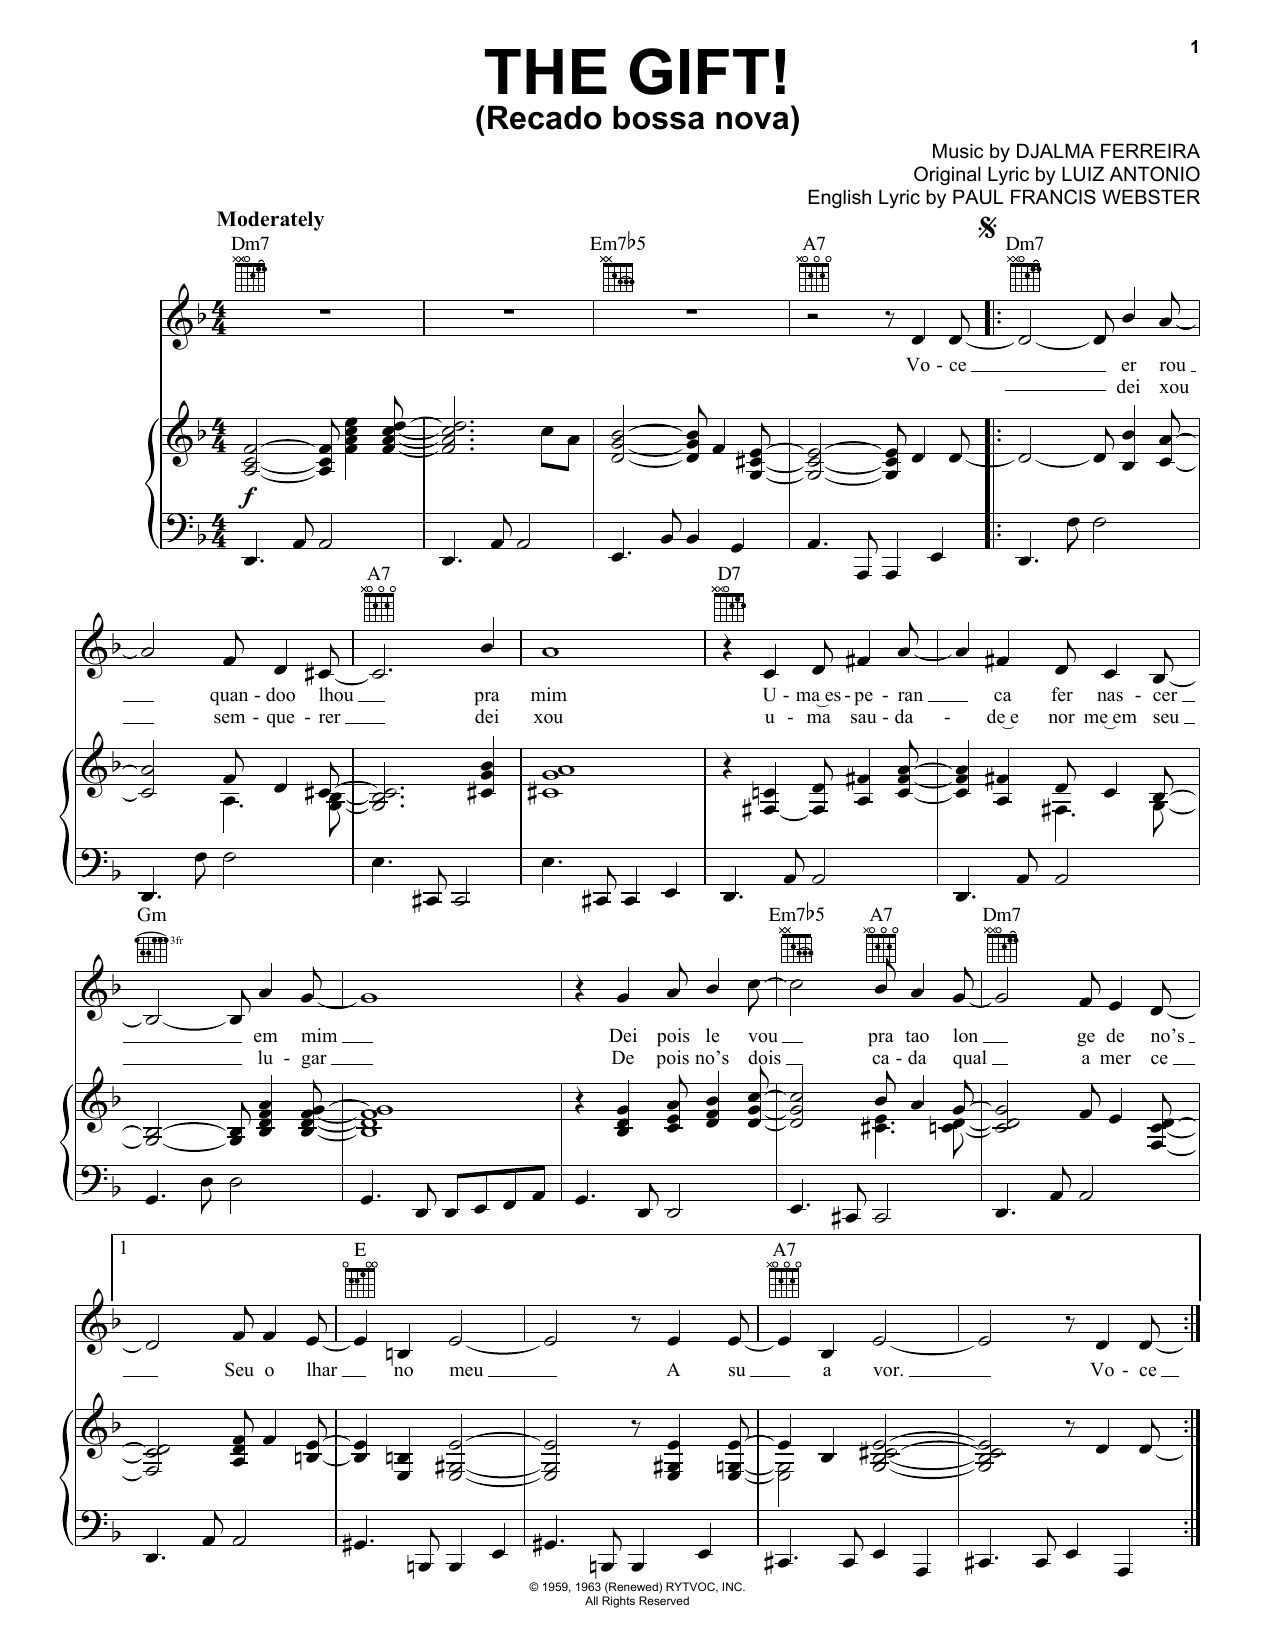 Luiz Antonio The Gift! (Recado Bossa Nova) Sheet Music Notes & Chords for Piano, Vocal & Guitar (Right-Hand Melody) - Download or Print PDF